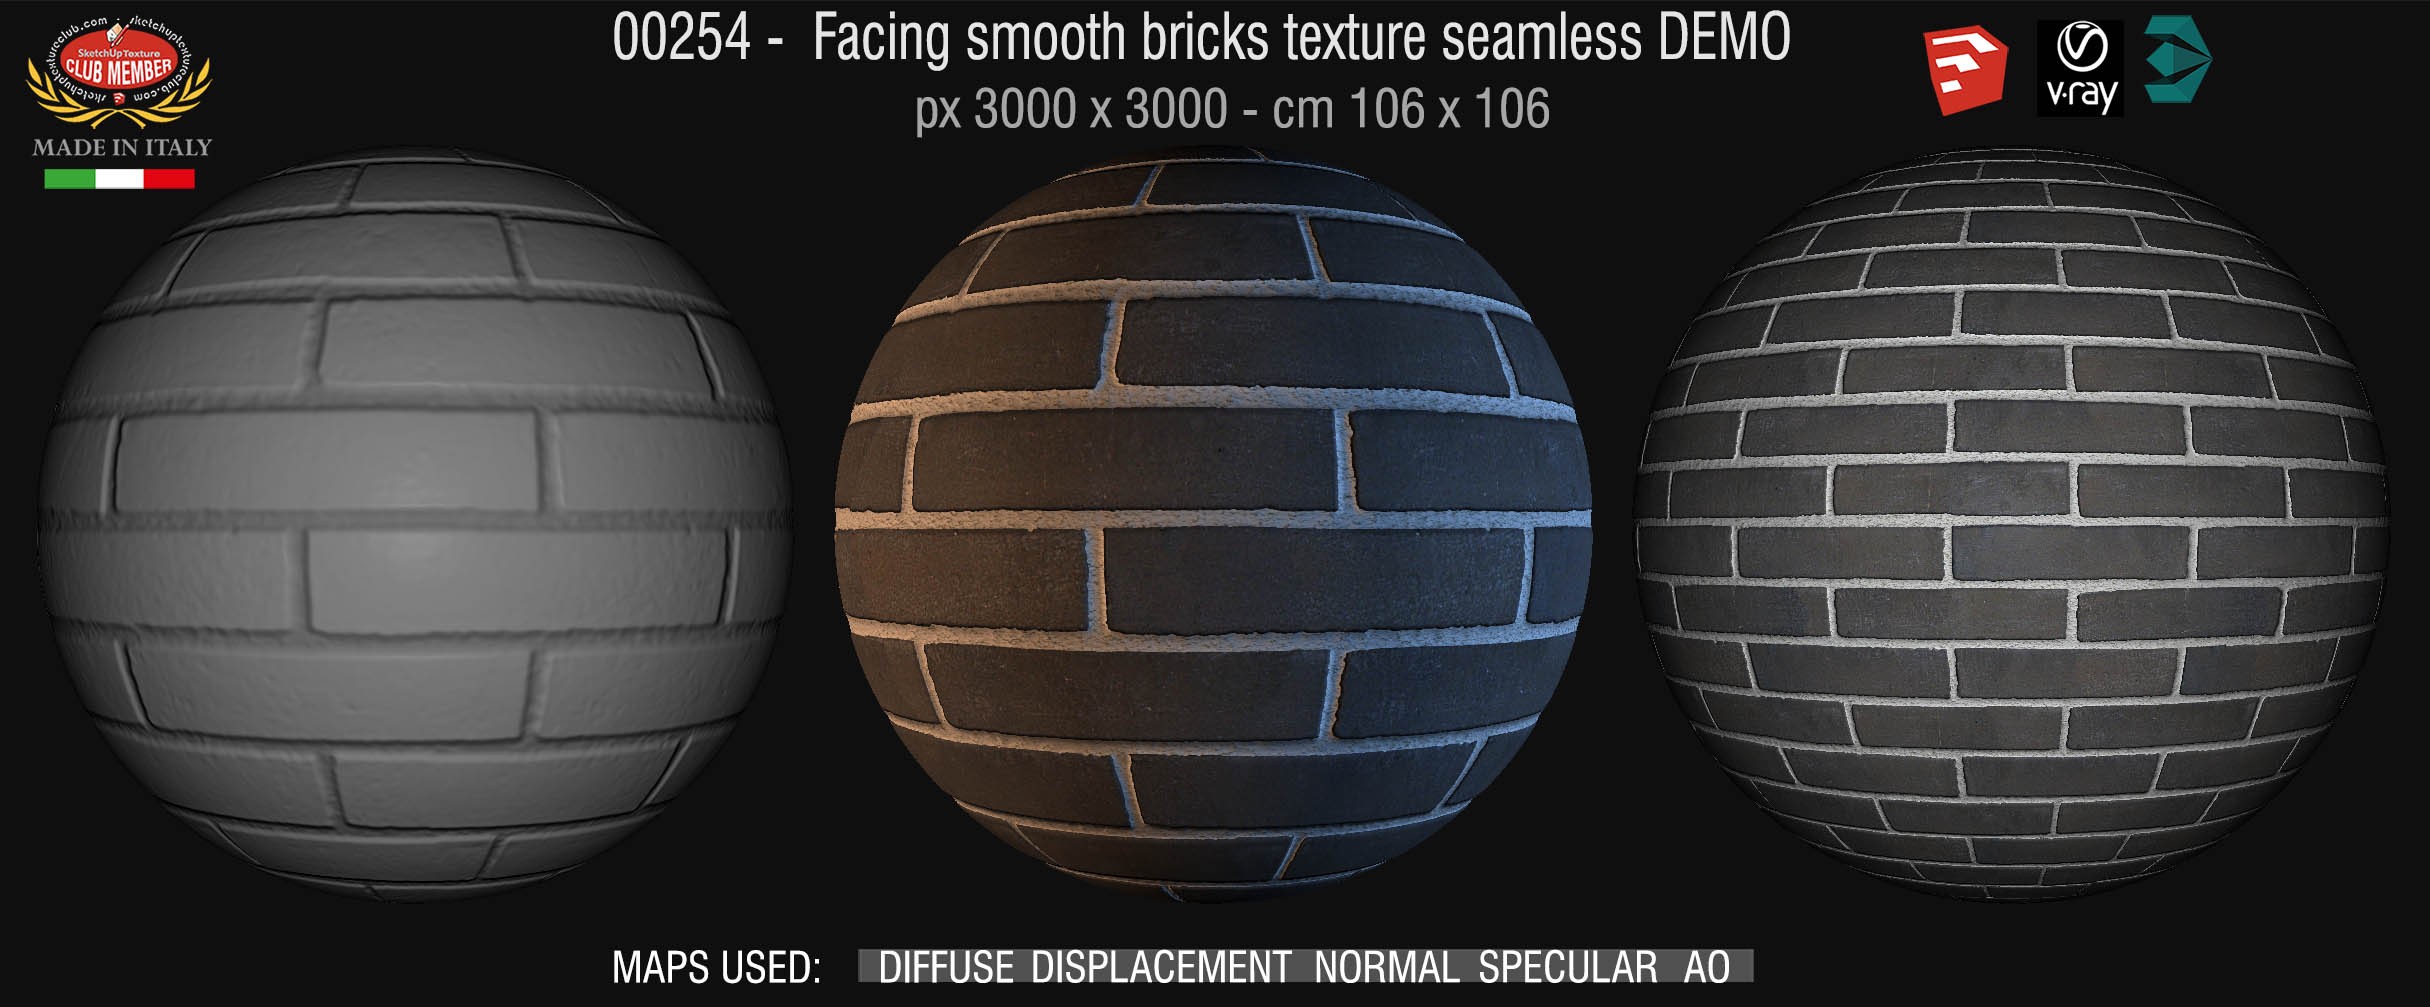 00254 Facing smooth bricks texture seamless + maps DEMO